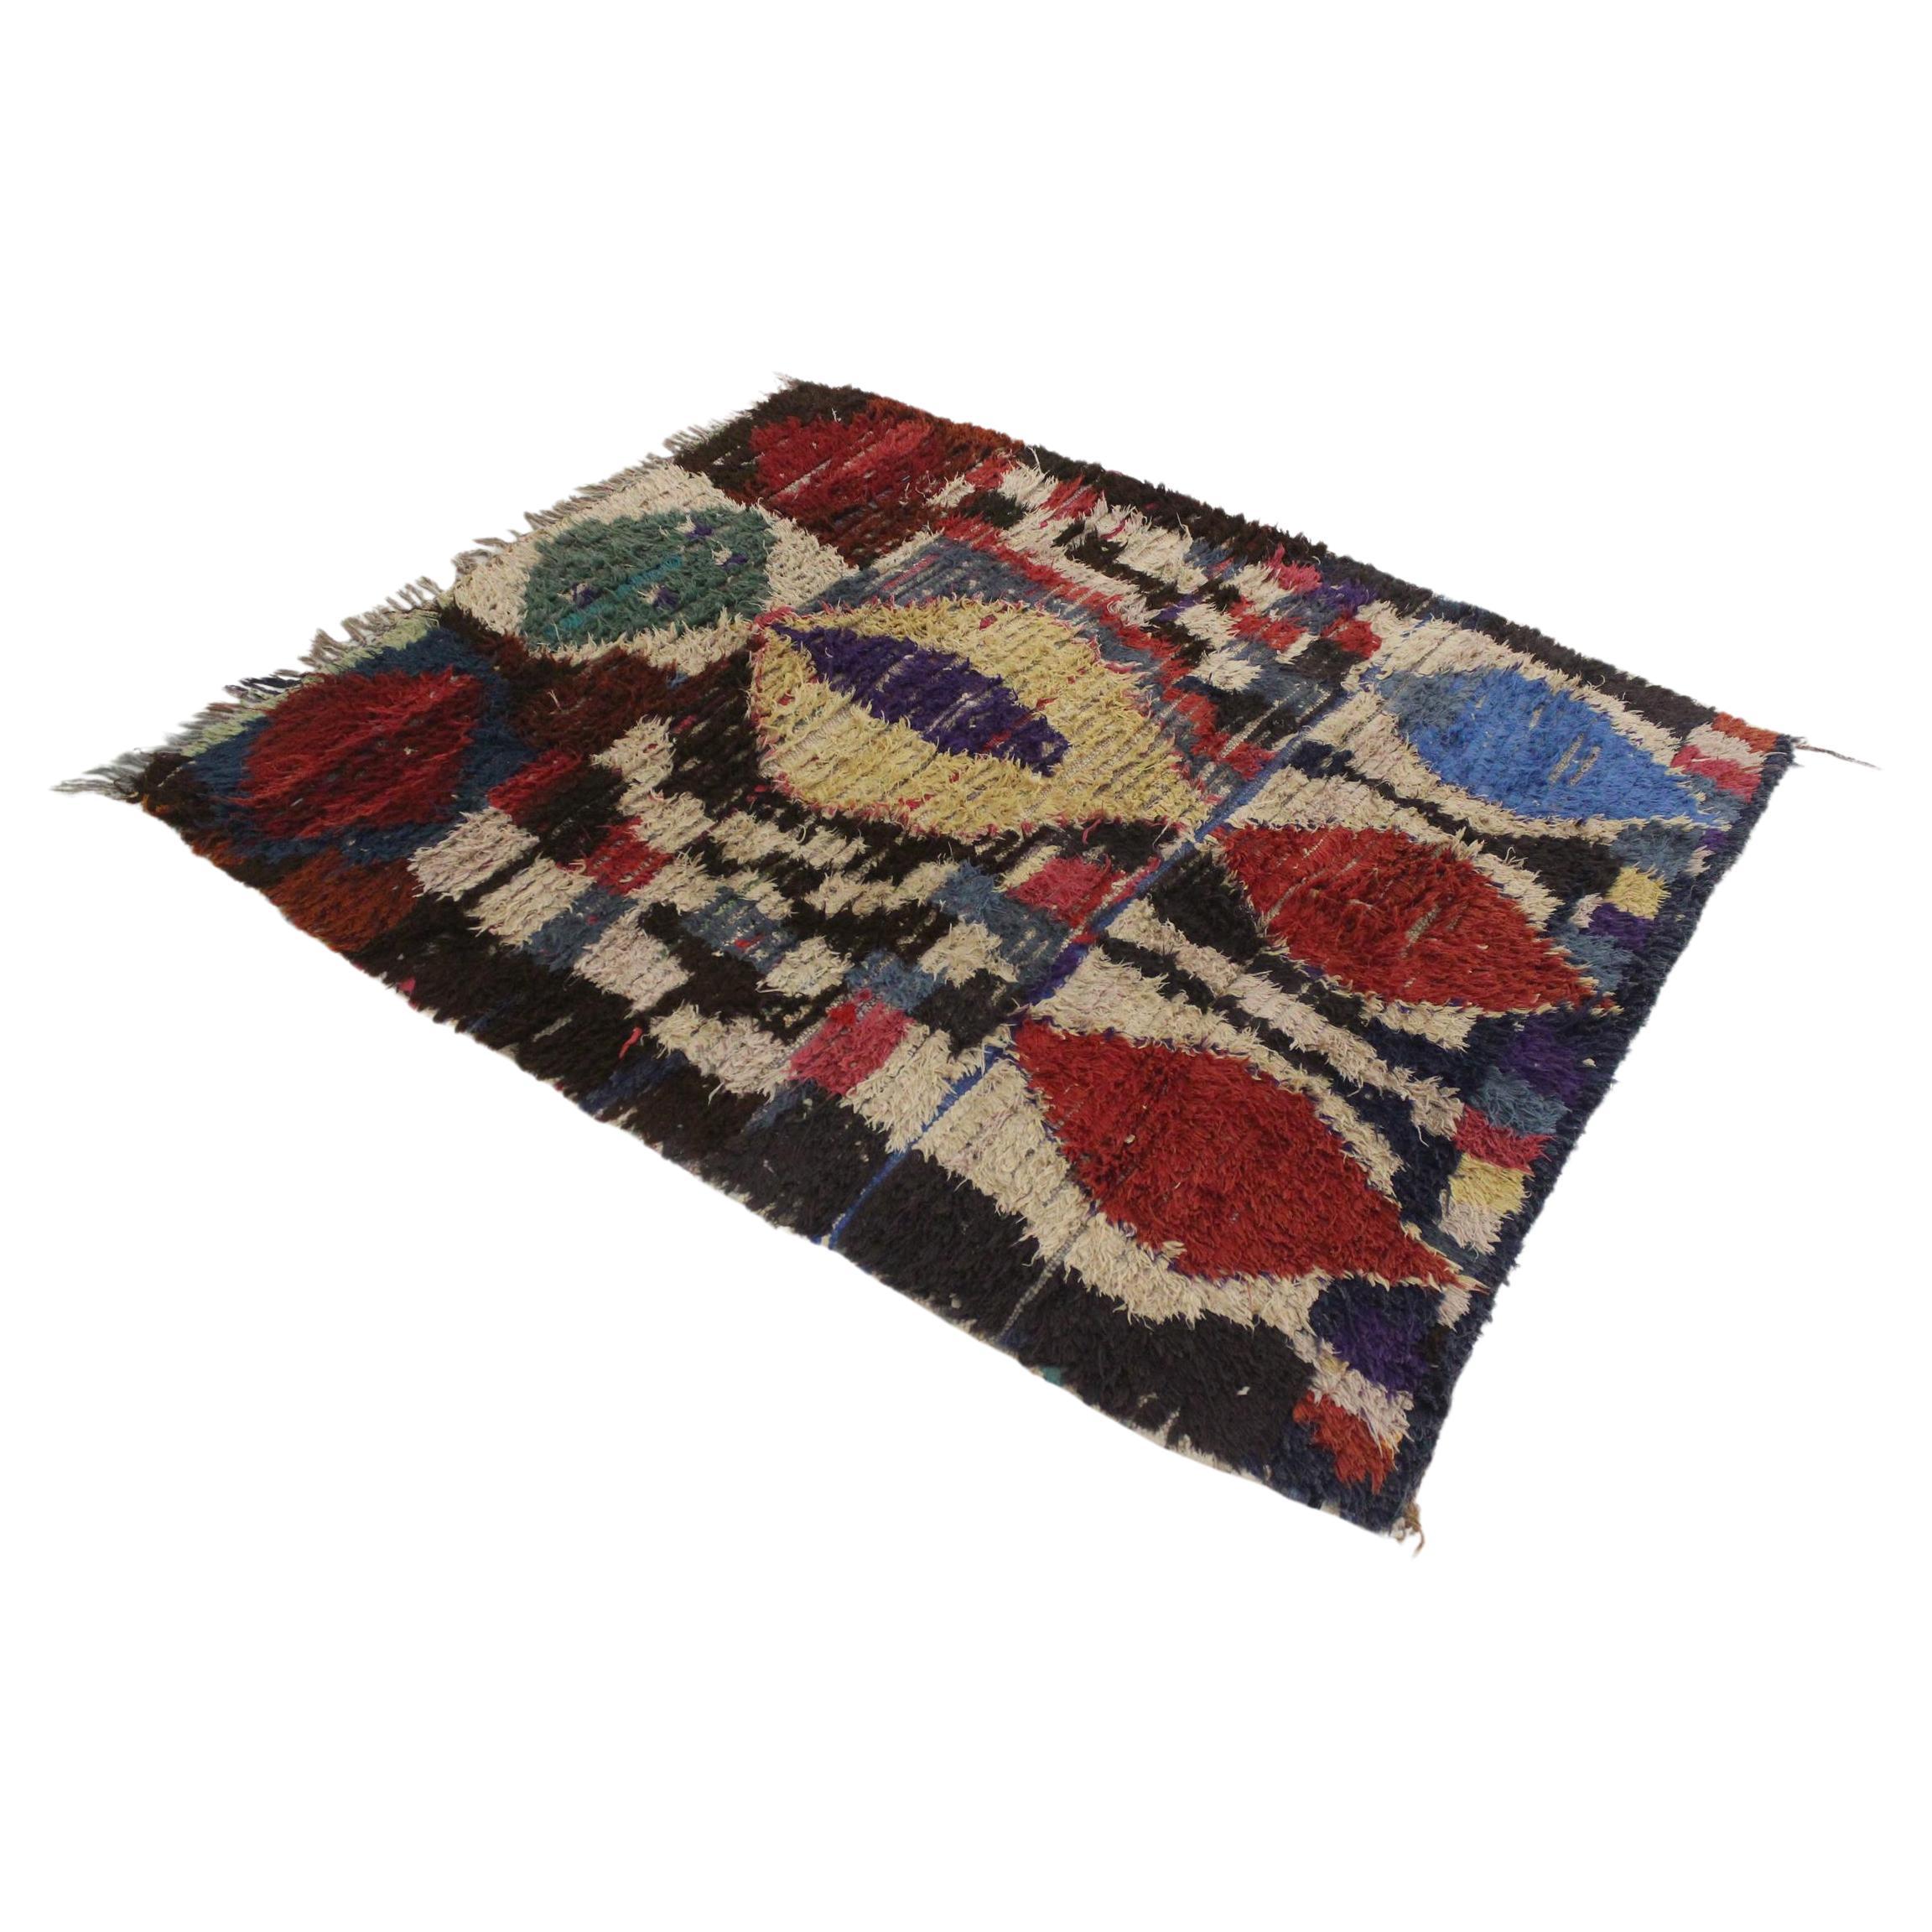 Vintage Moroccan Boucherouite rug - Multicolor - 5x5.7feet / 154x175cm For Sale